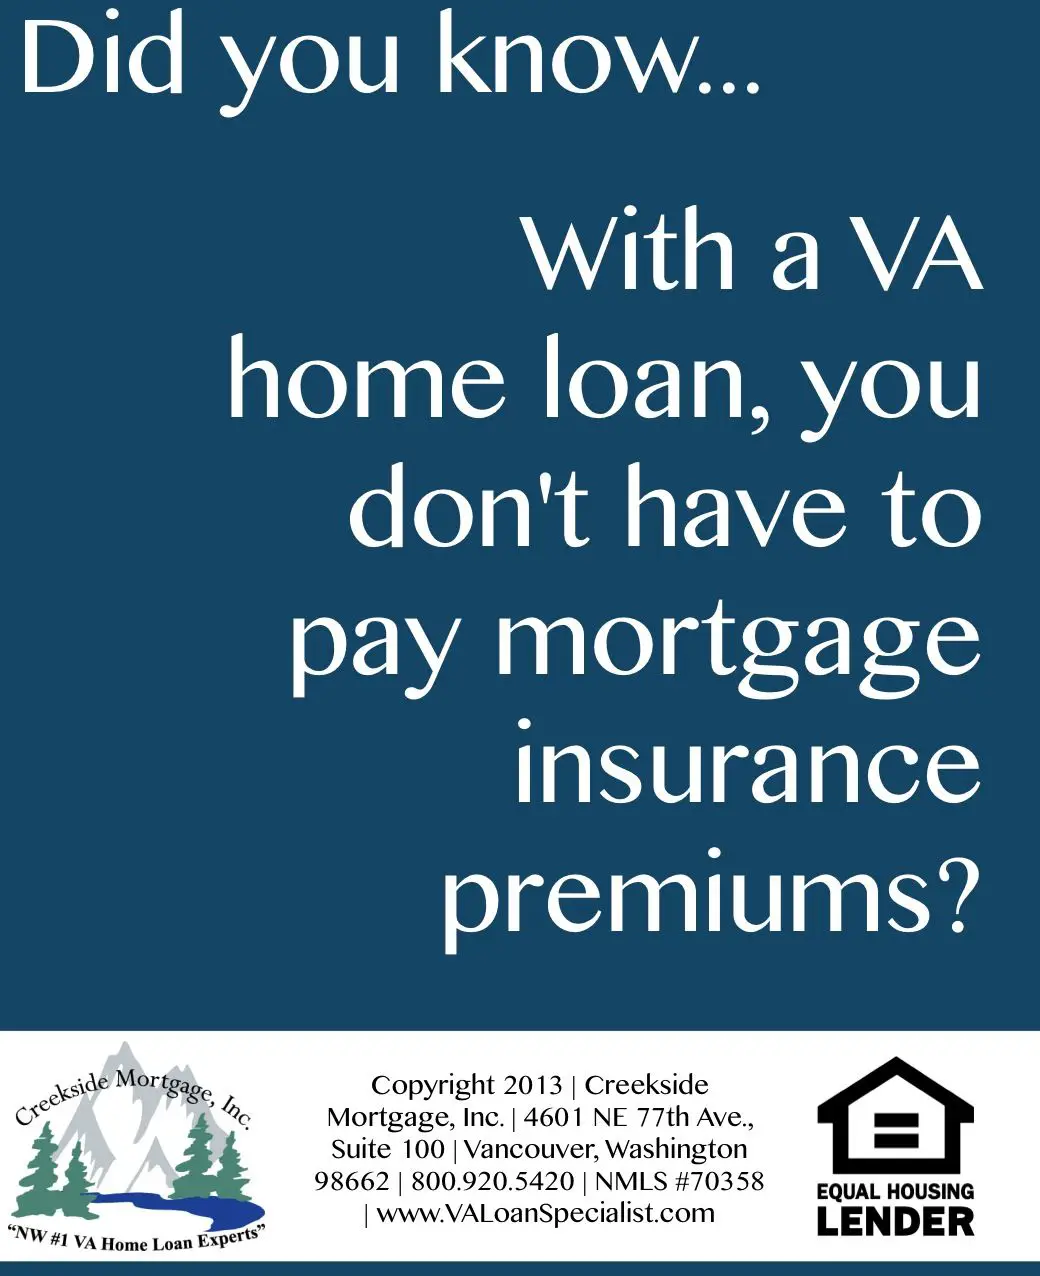 The Northwest #1 VA Home Loan Experts